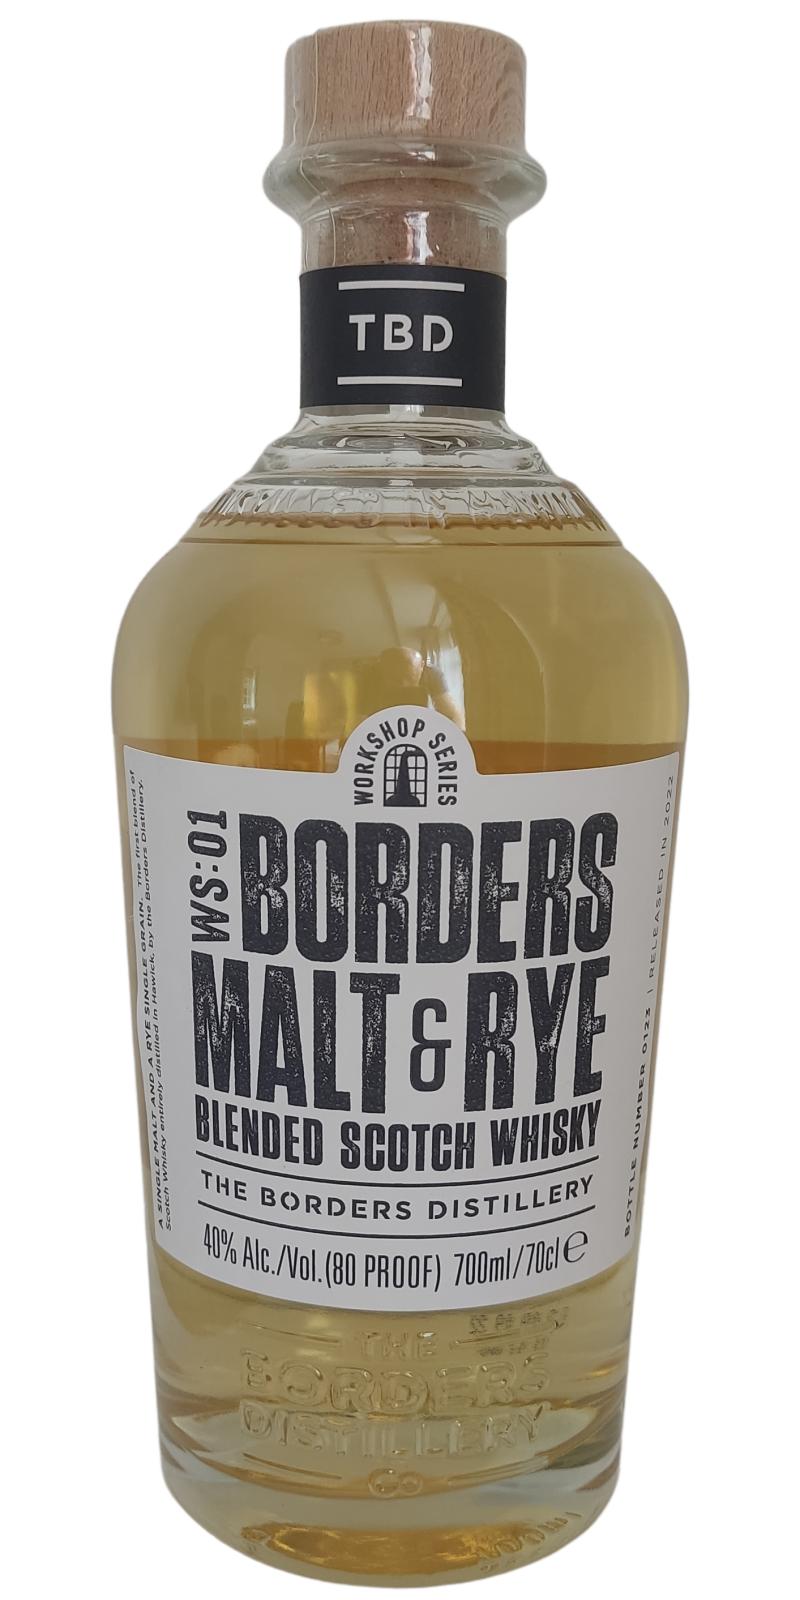 The Borders Distillery WS:01 Borders Malt & Rye